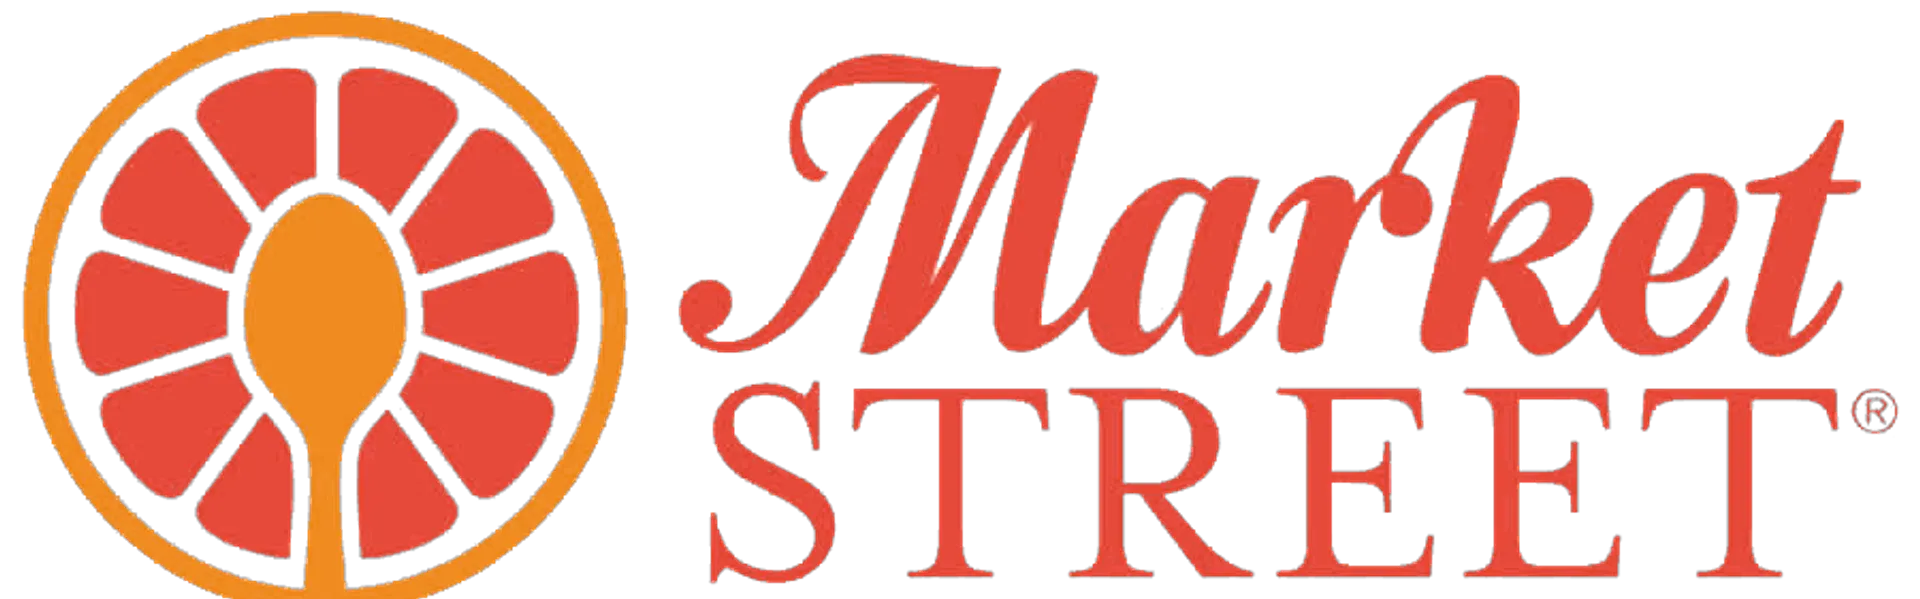 MARKET STREET logo. Current weekly ad